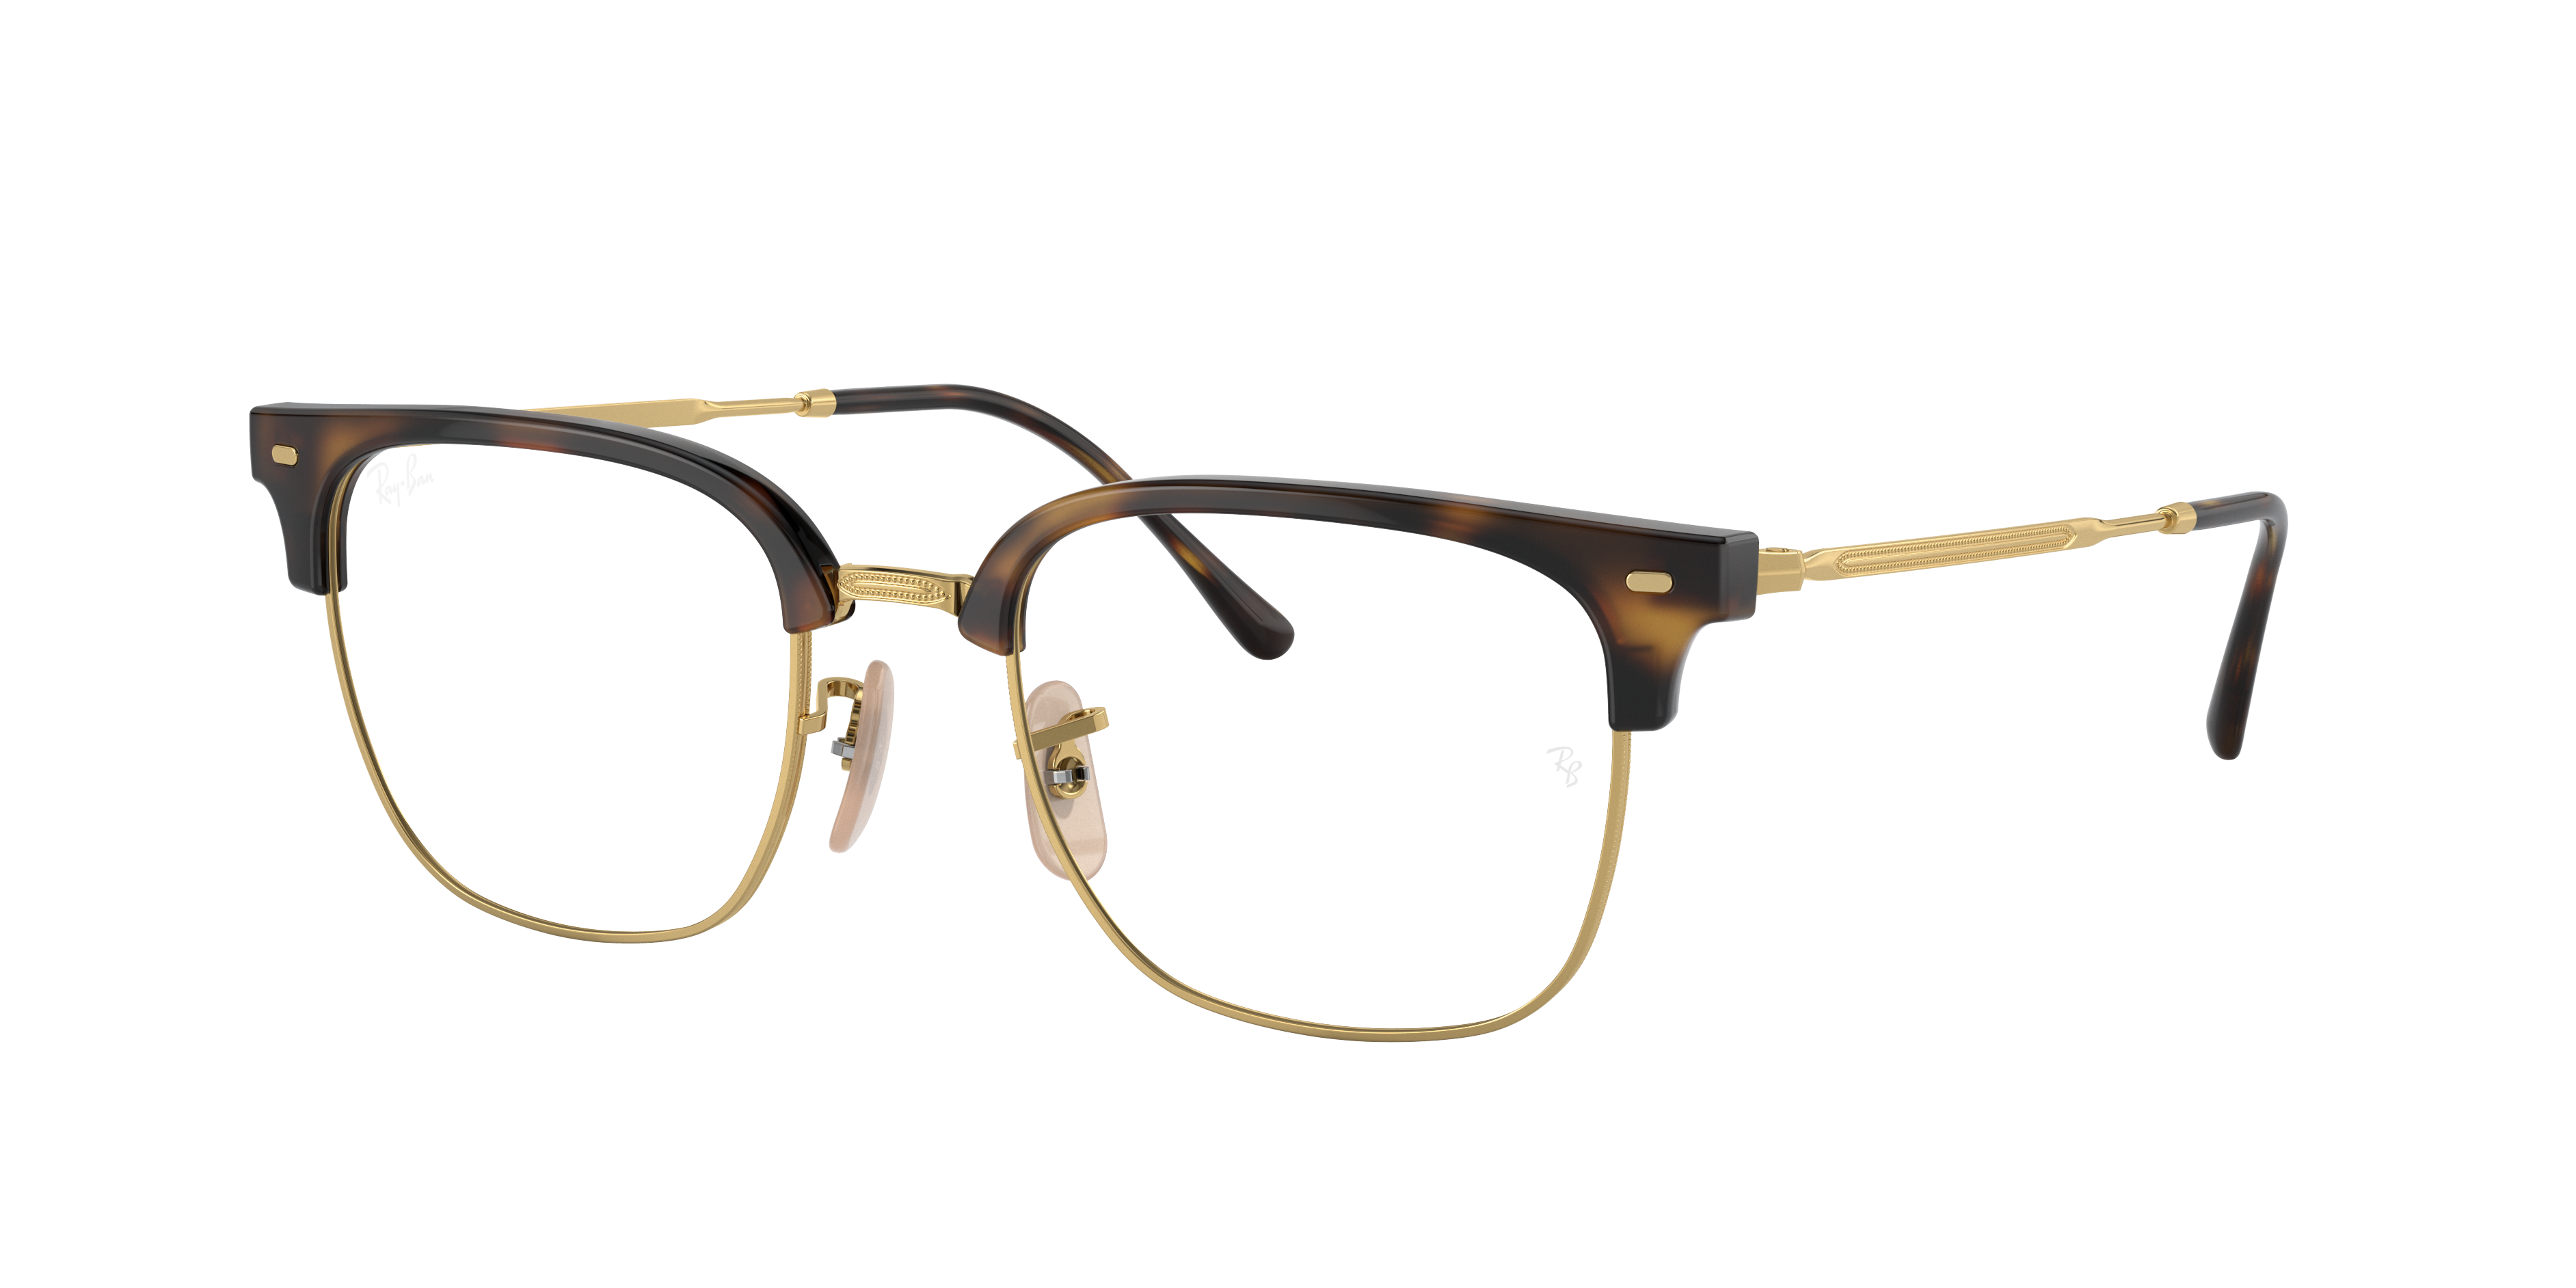 New Clubmaster Optics Eyeglasses with Havana On Gold Frame | Ray-Ban®